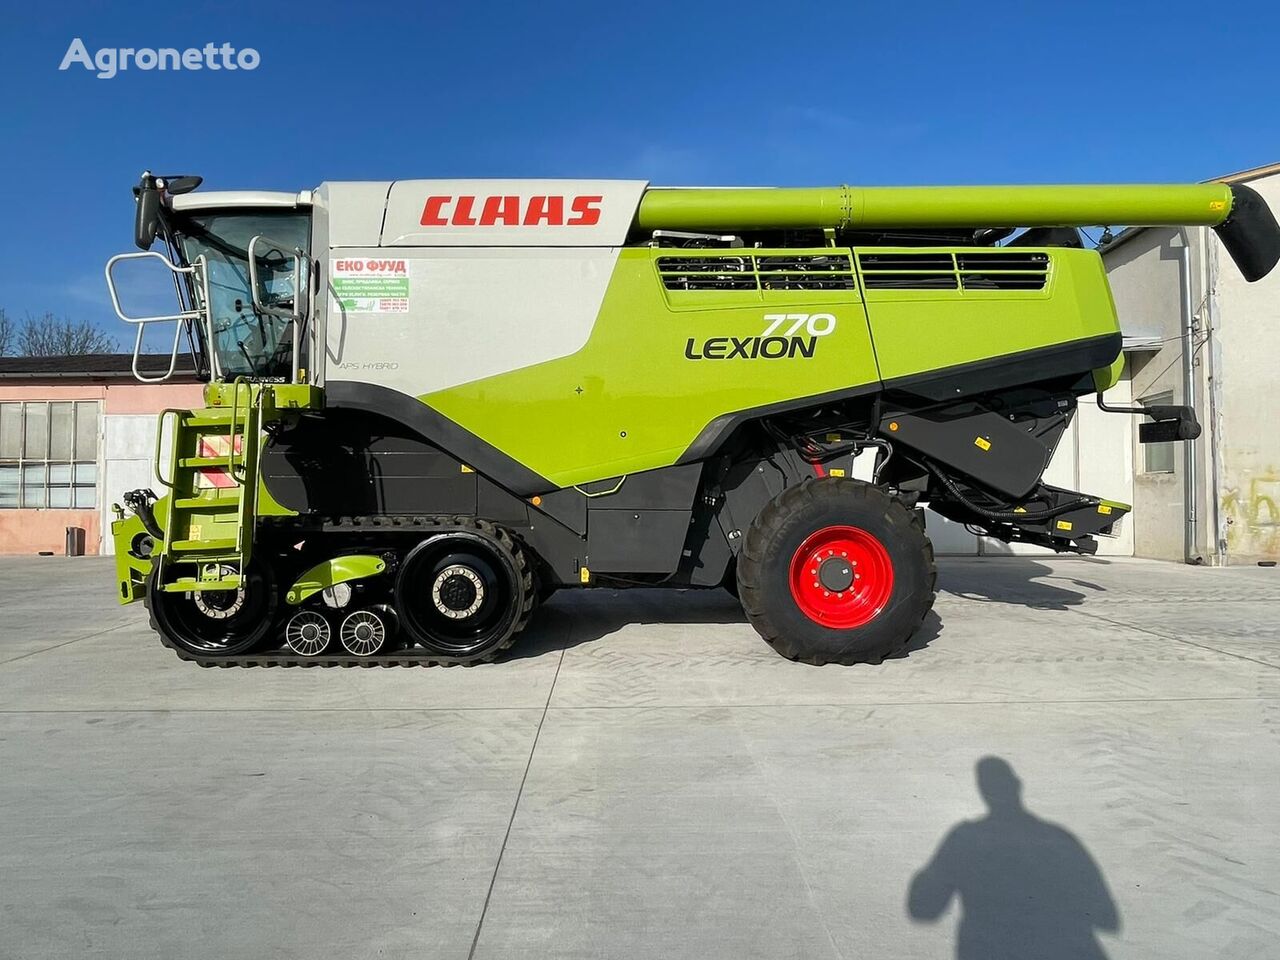 Claas Lexion 770 TT grain harvester